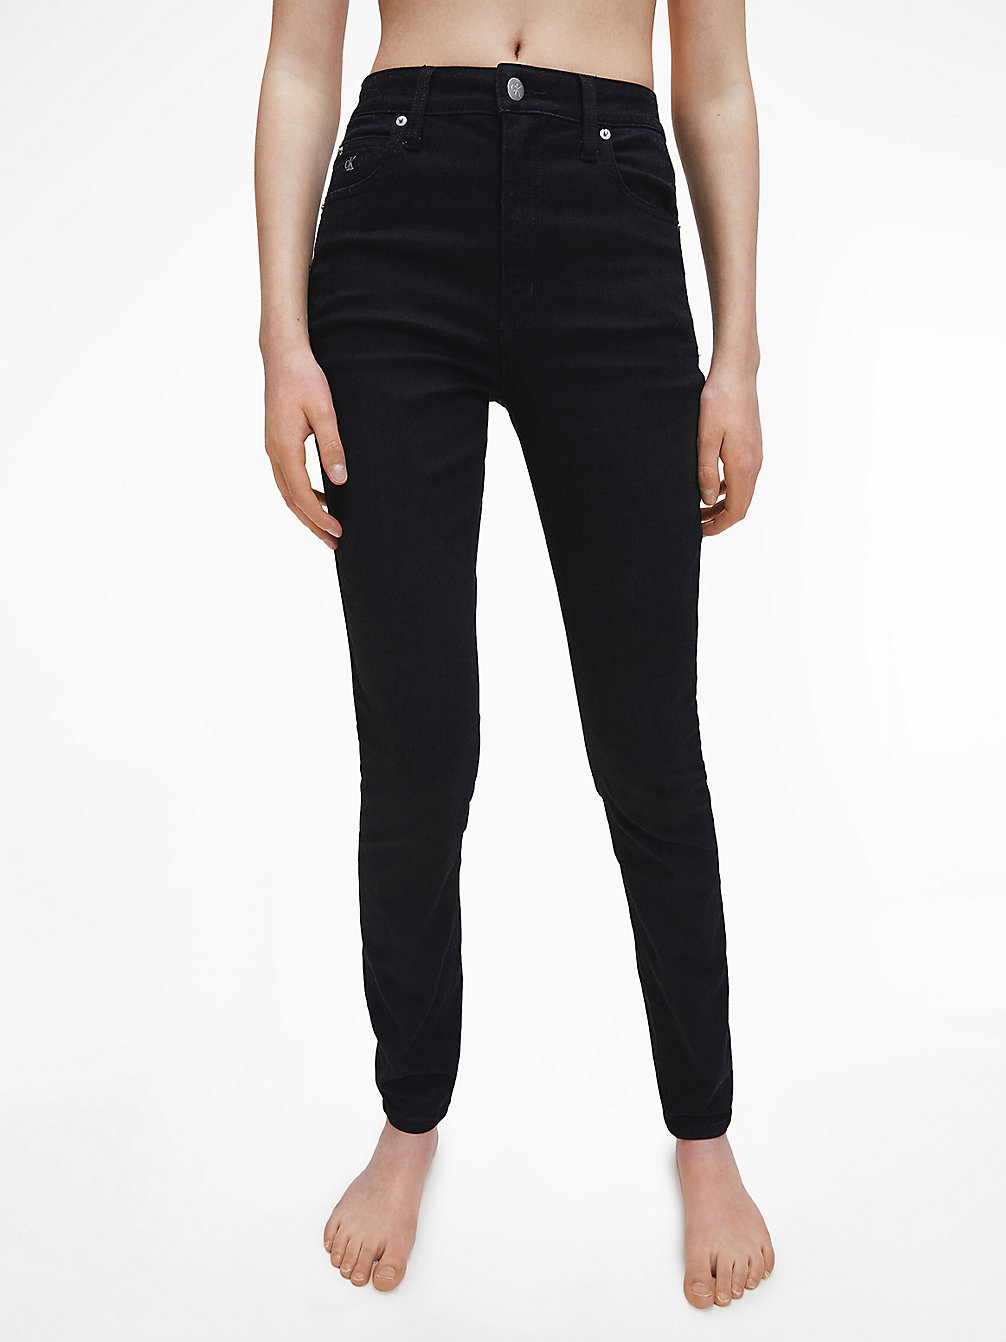 Jeans Skinny De Tiro Alto > ZZ003 BLACK > undefined mujer > Calvin Klein